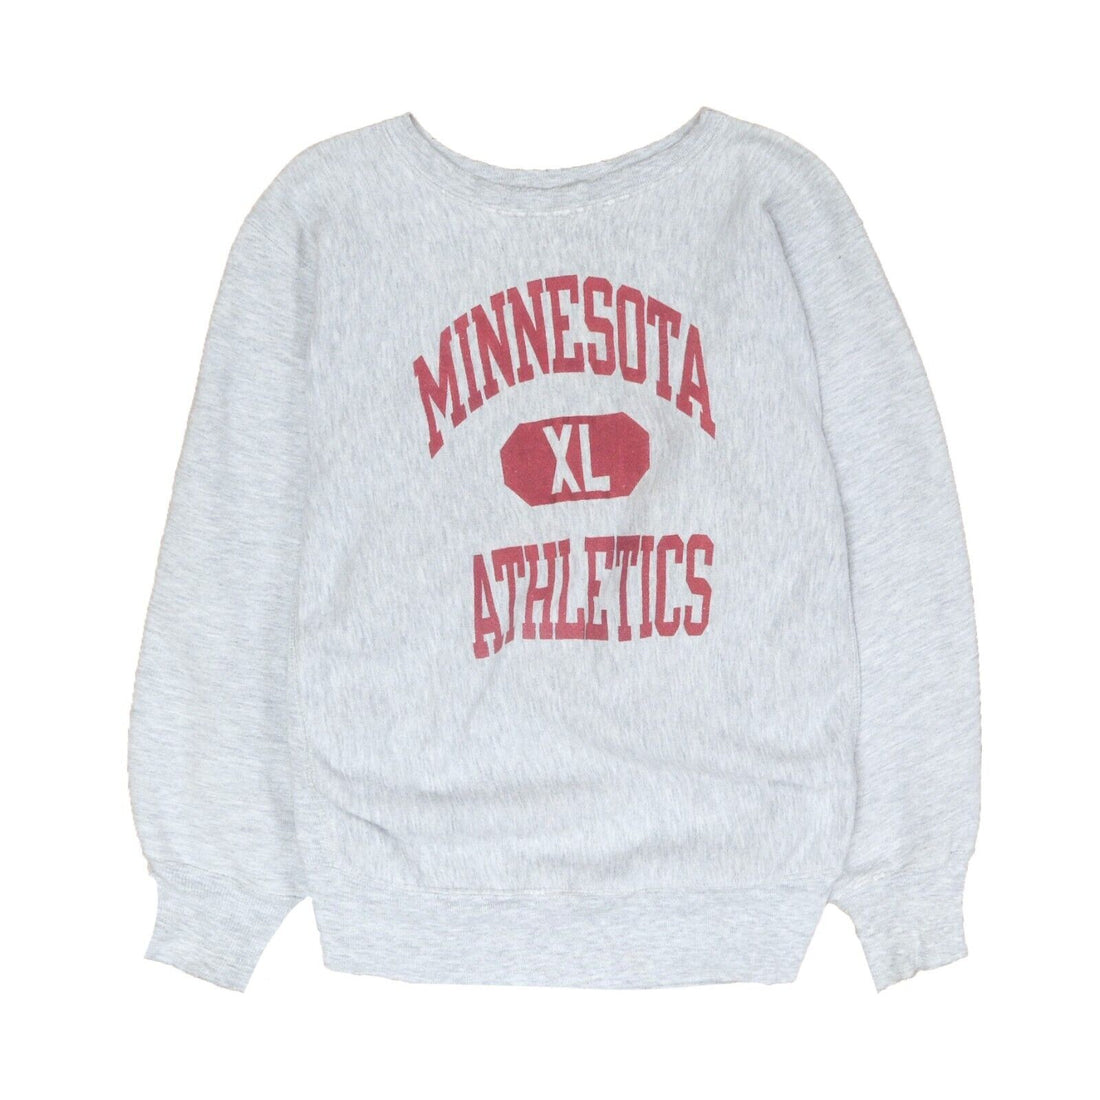 Vintage Minnesota Athletic Champion Reverse Weave Sweatshirt Size Large 80s Gray